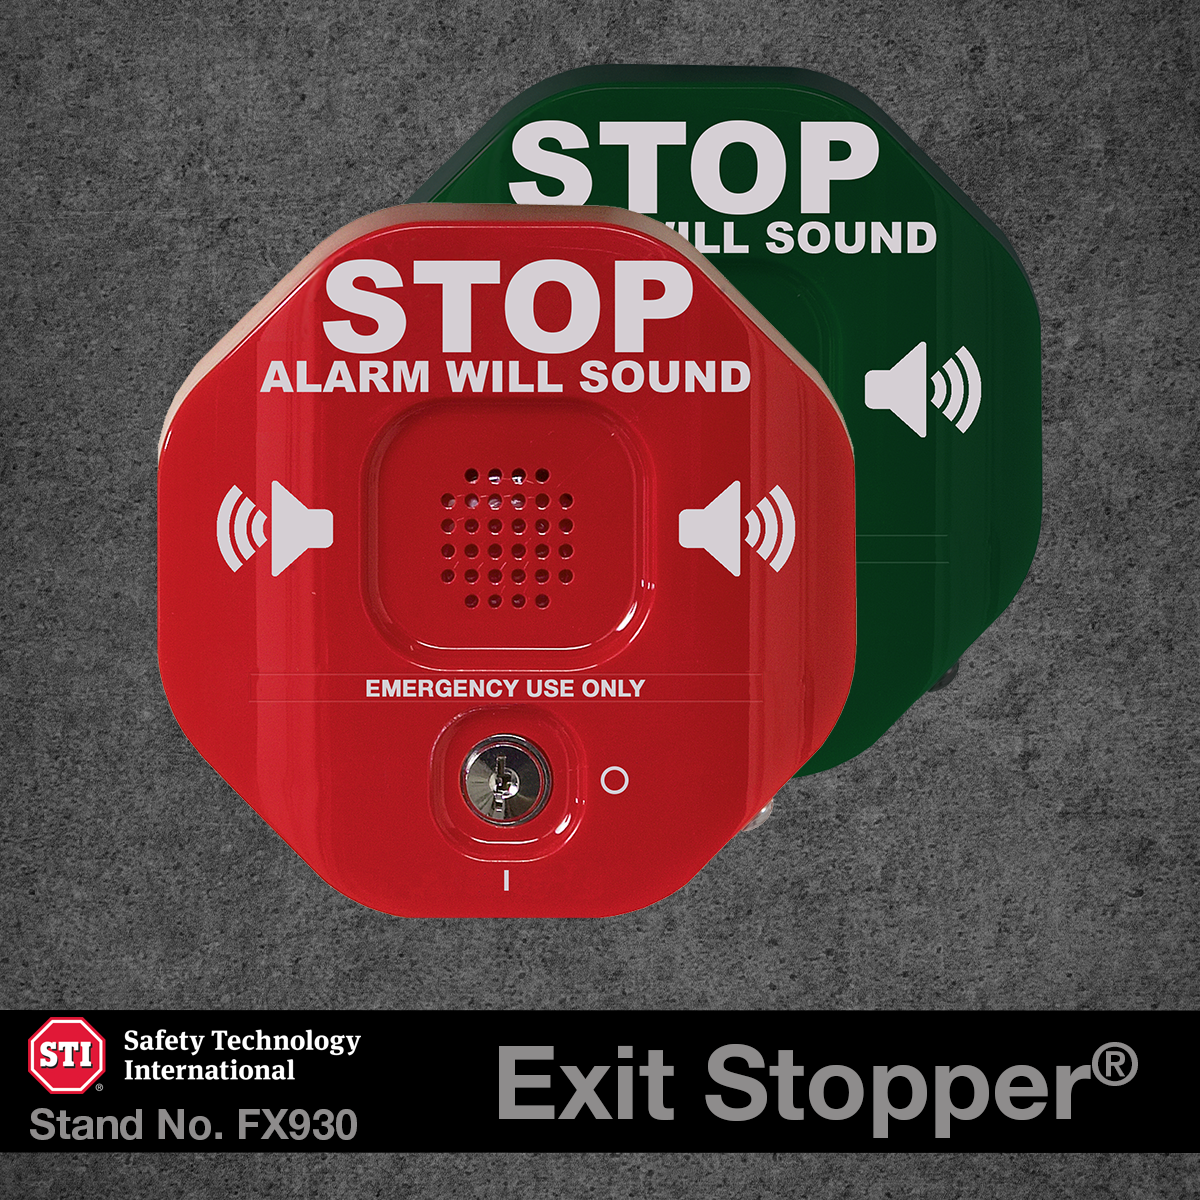 Multifunction Door Alarm Safety Technology model #STI-6400 STI Exit Stopper 